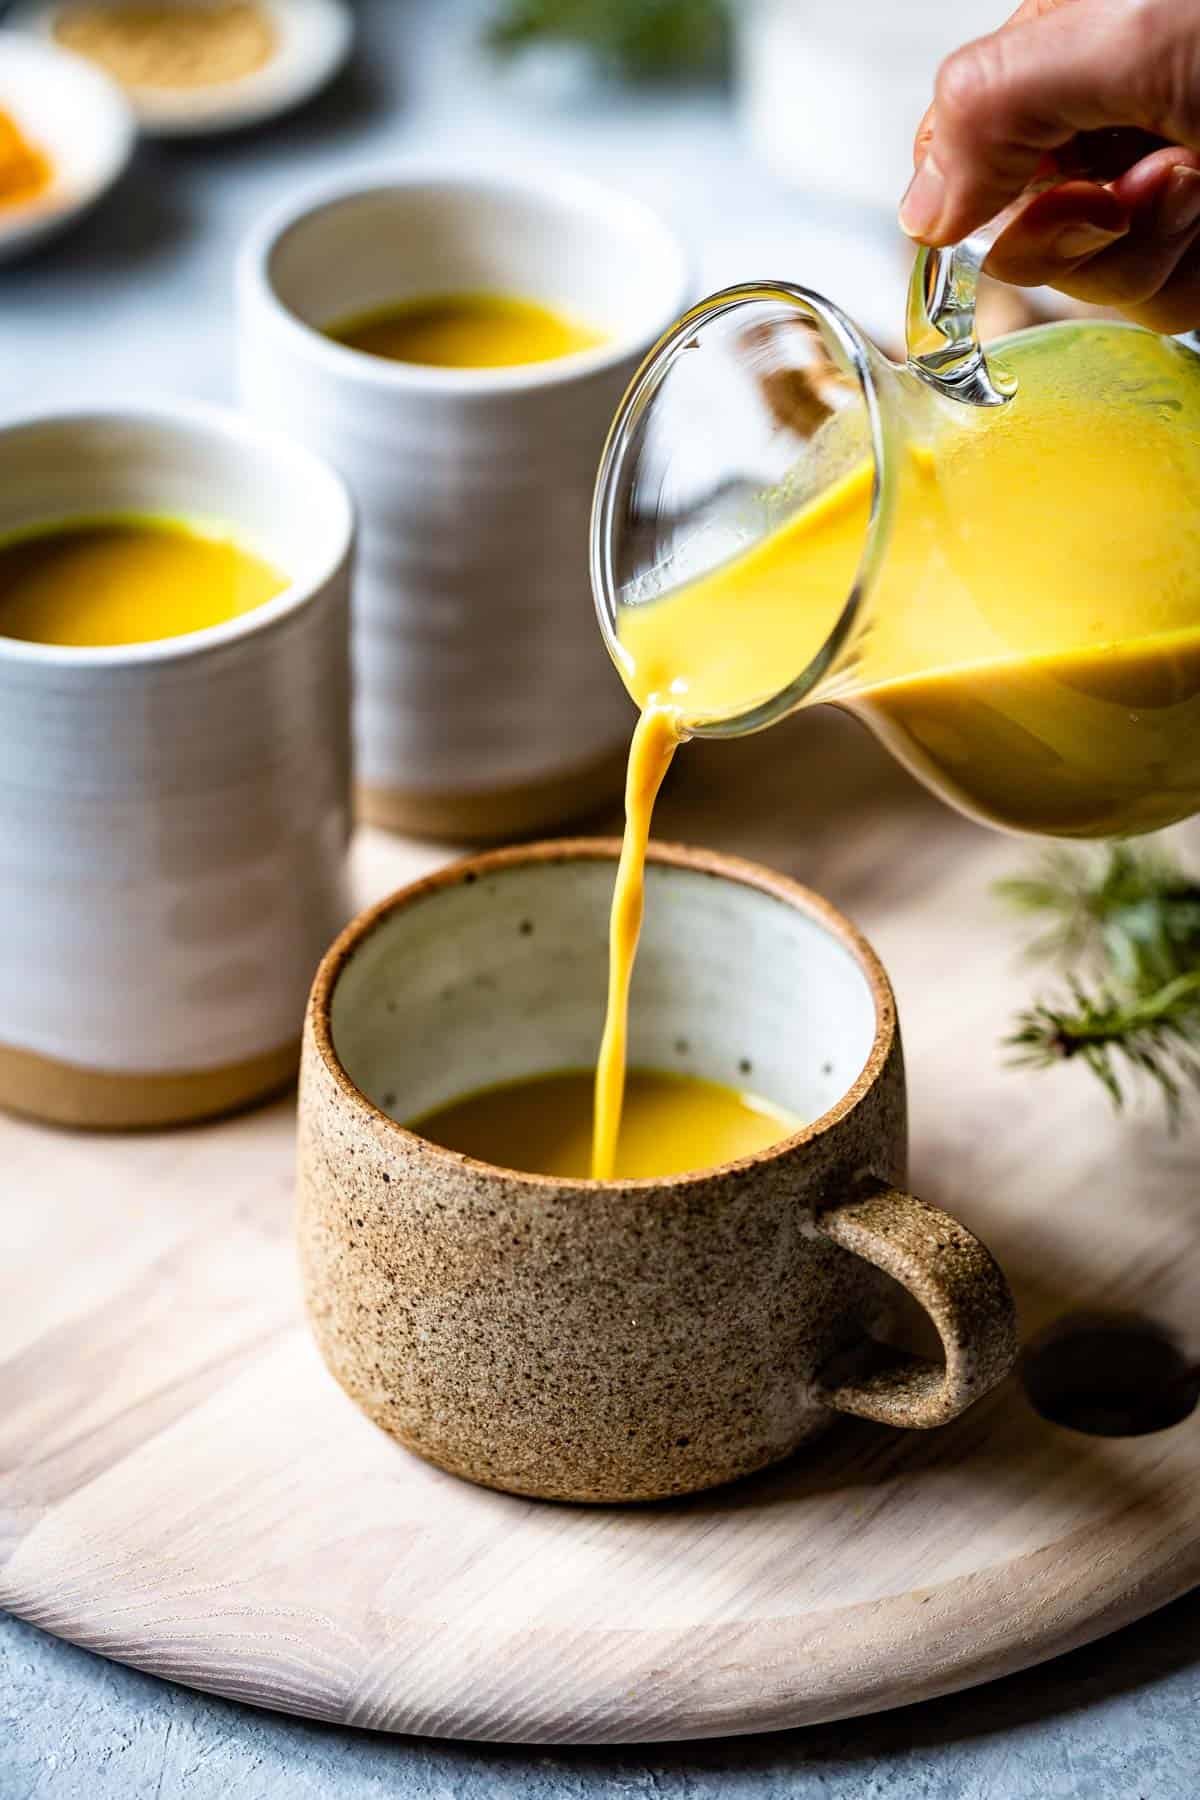 Golden Milk Tea being poured to a mug.